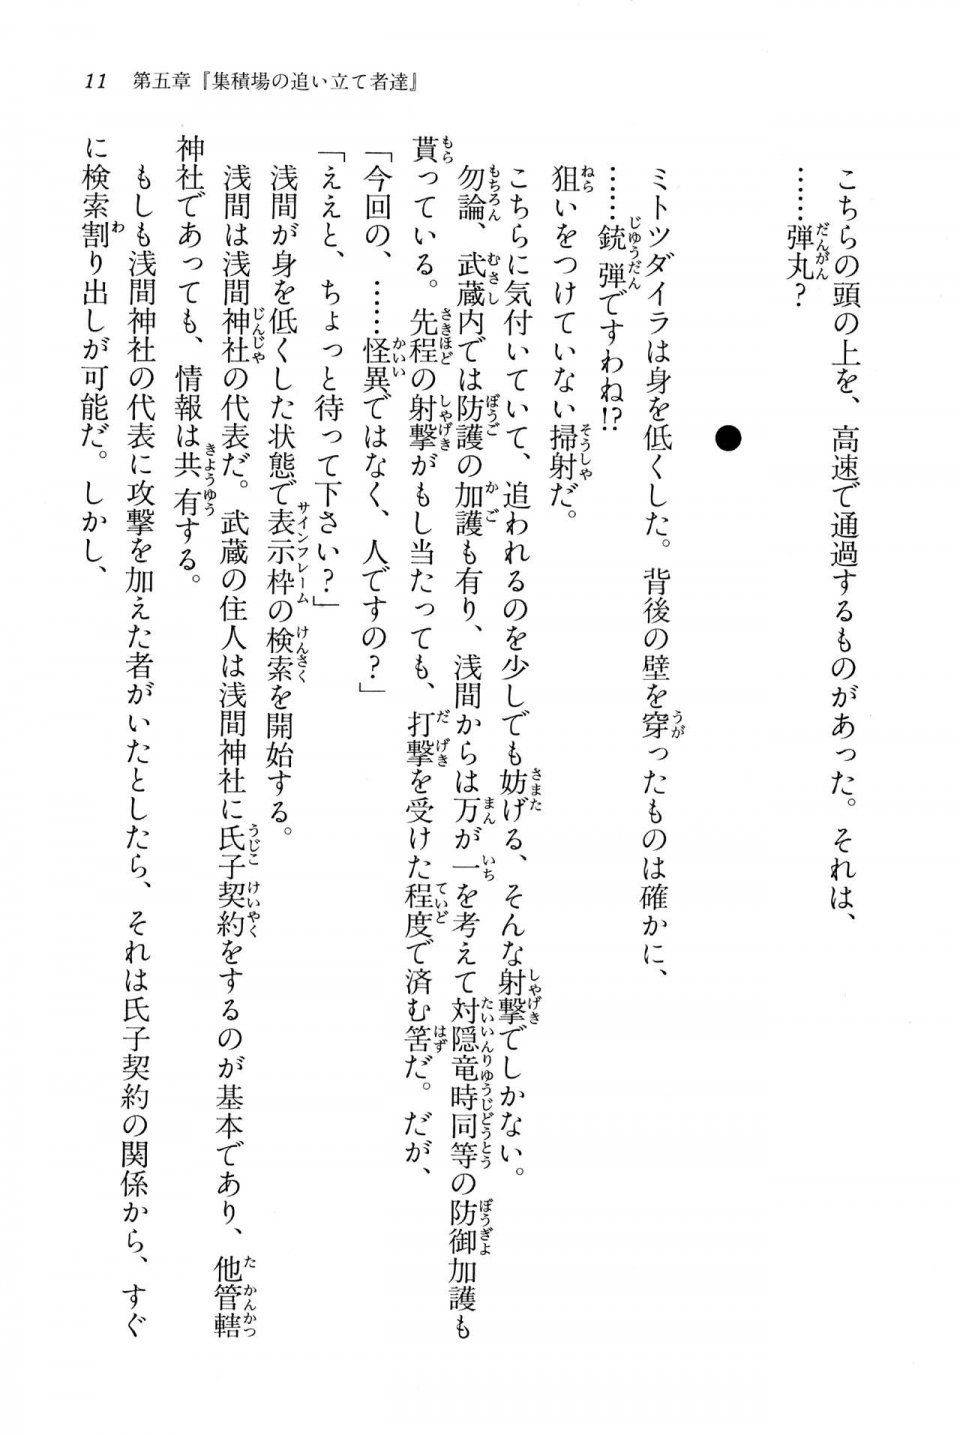 Kyoukai Senjou no Horizon BD Special Mininovel Vol 6(3B) - Photo #15